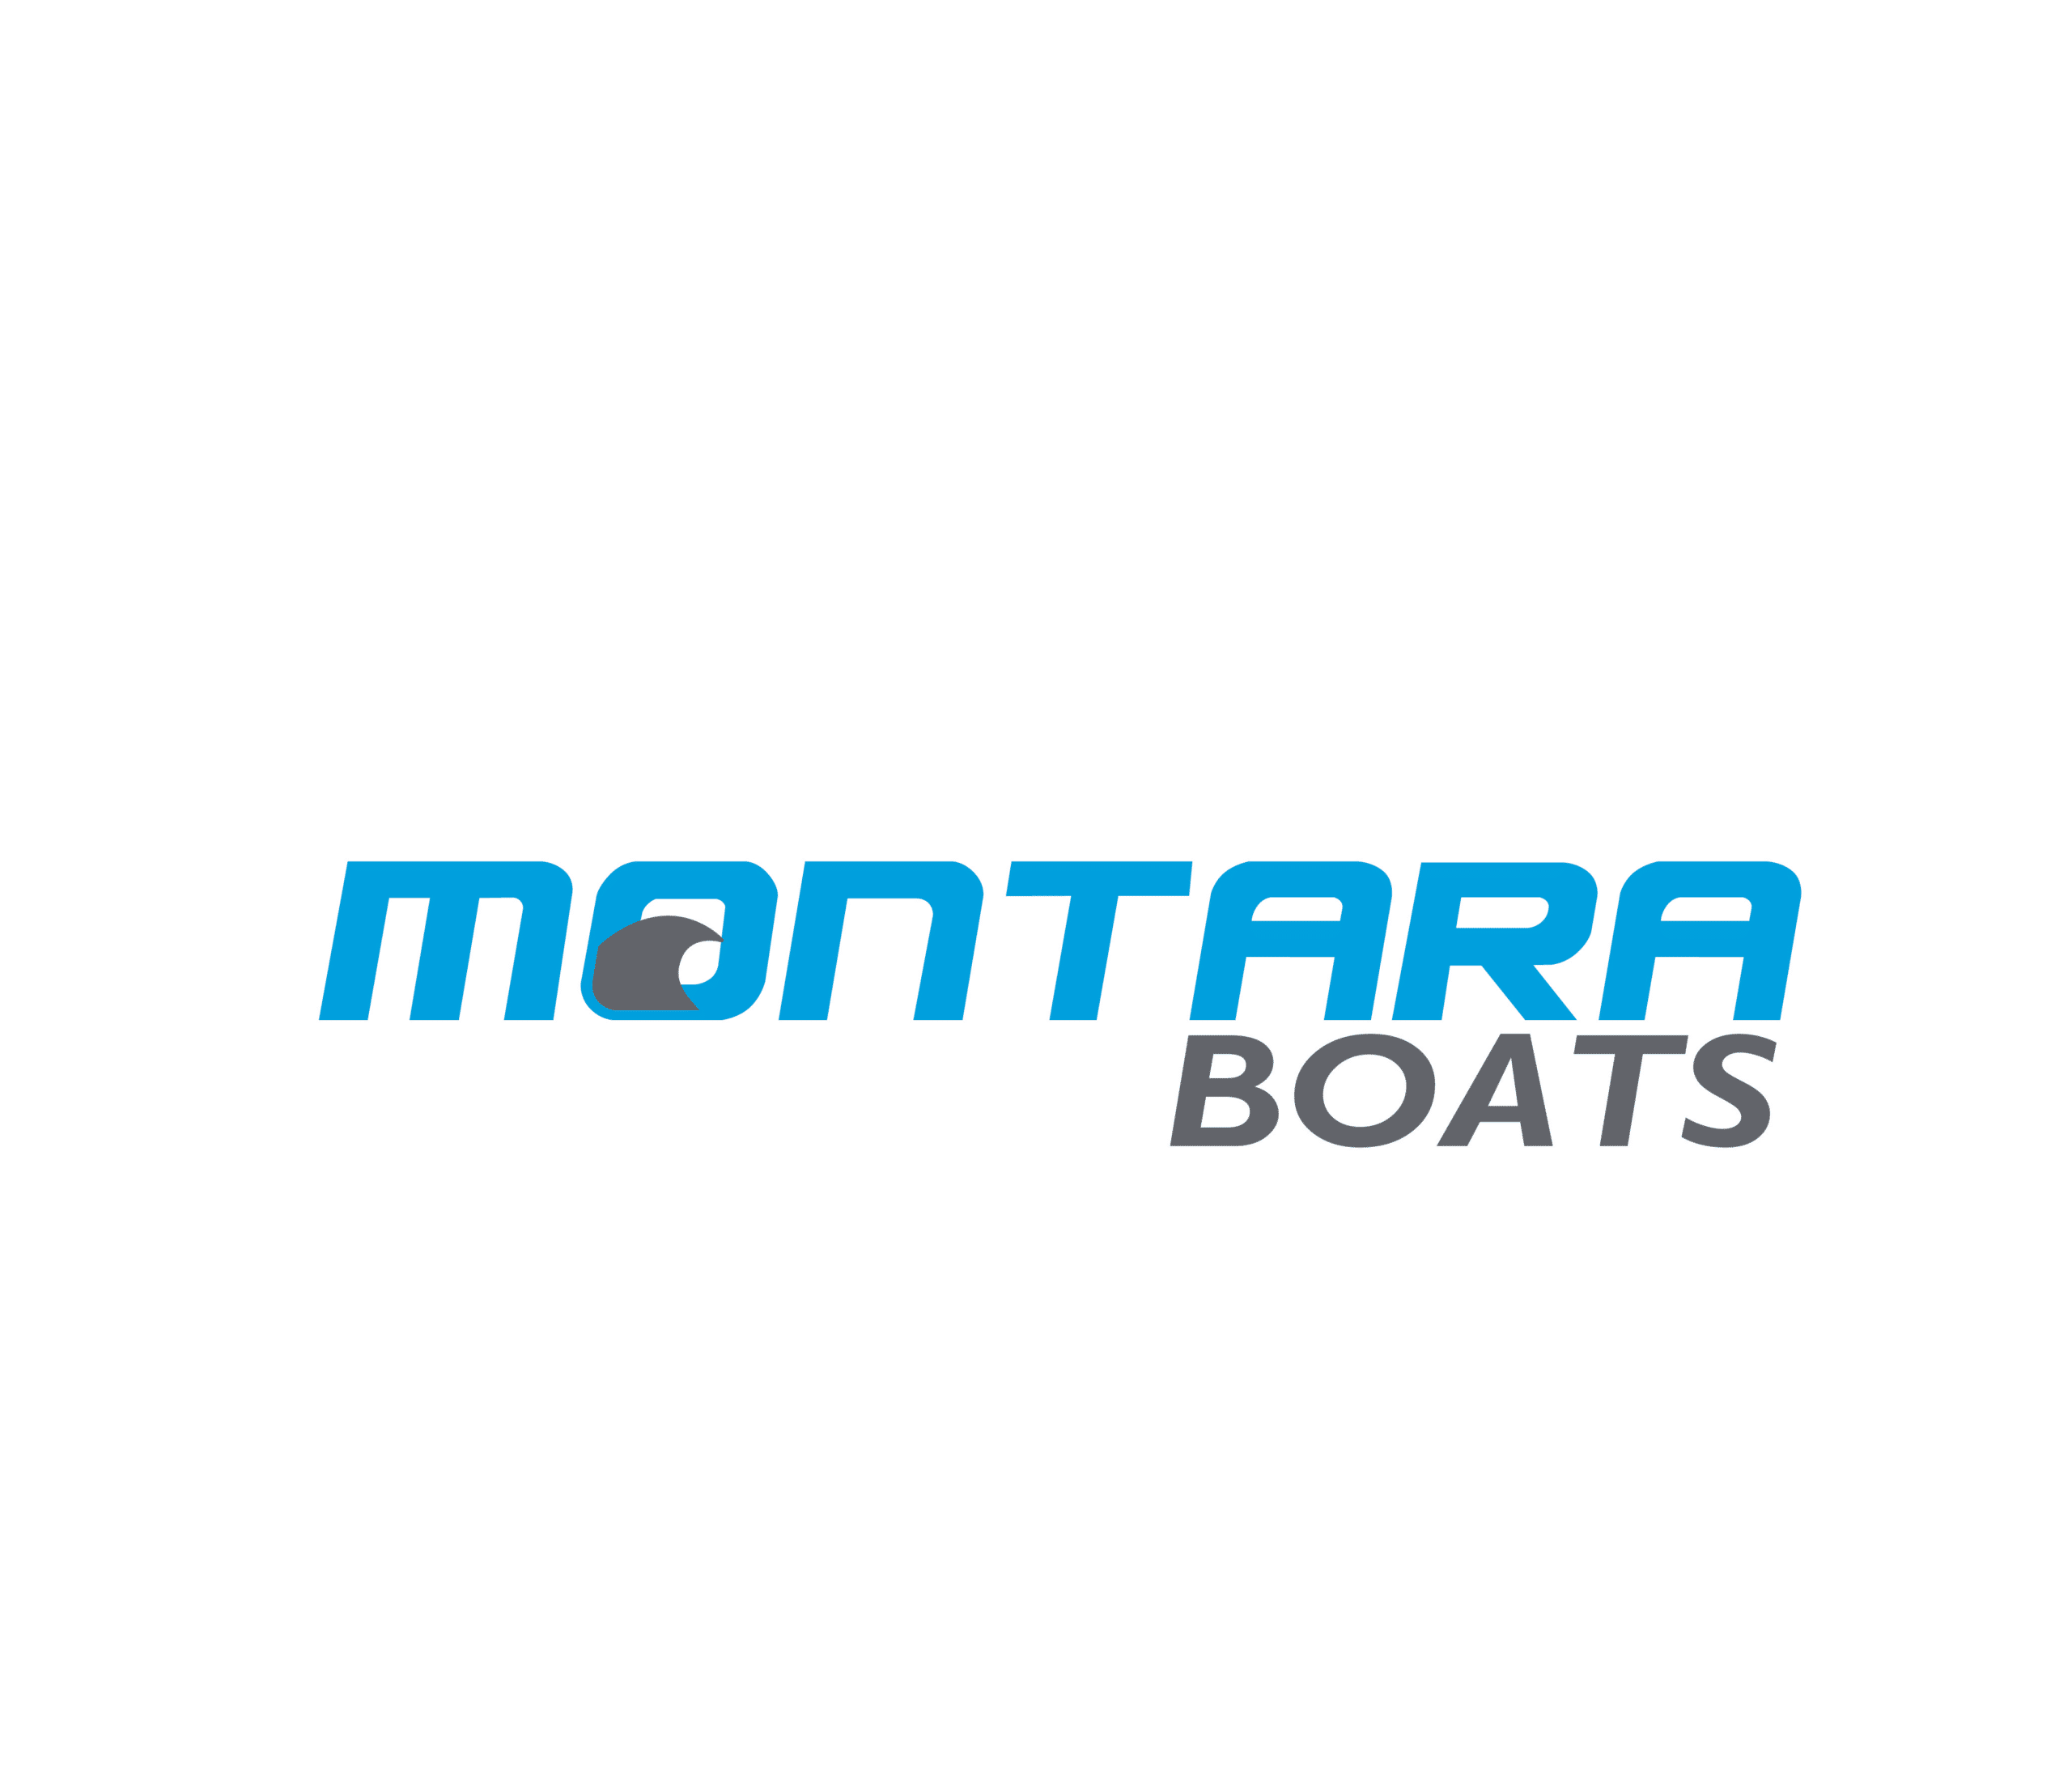 Montara Boats logo with blue Montara, black boats on white square background